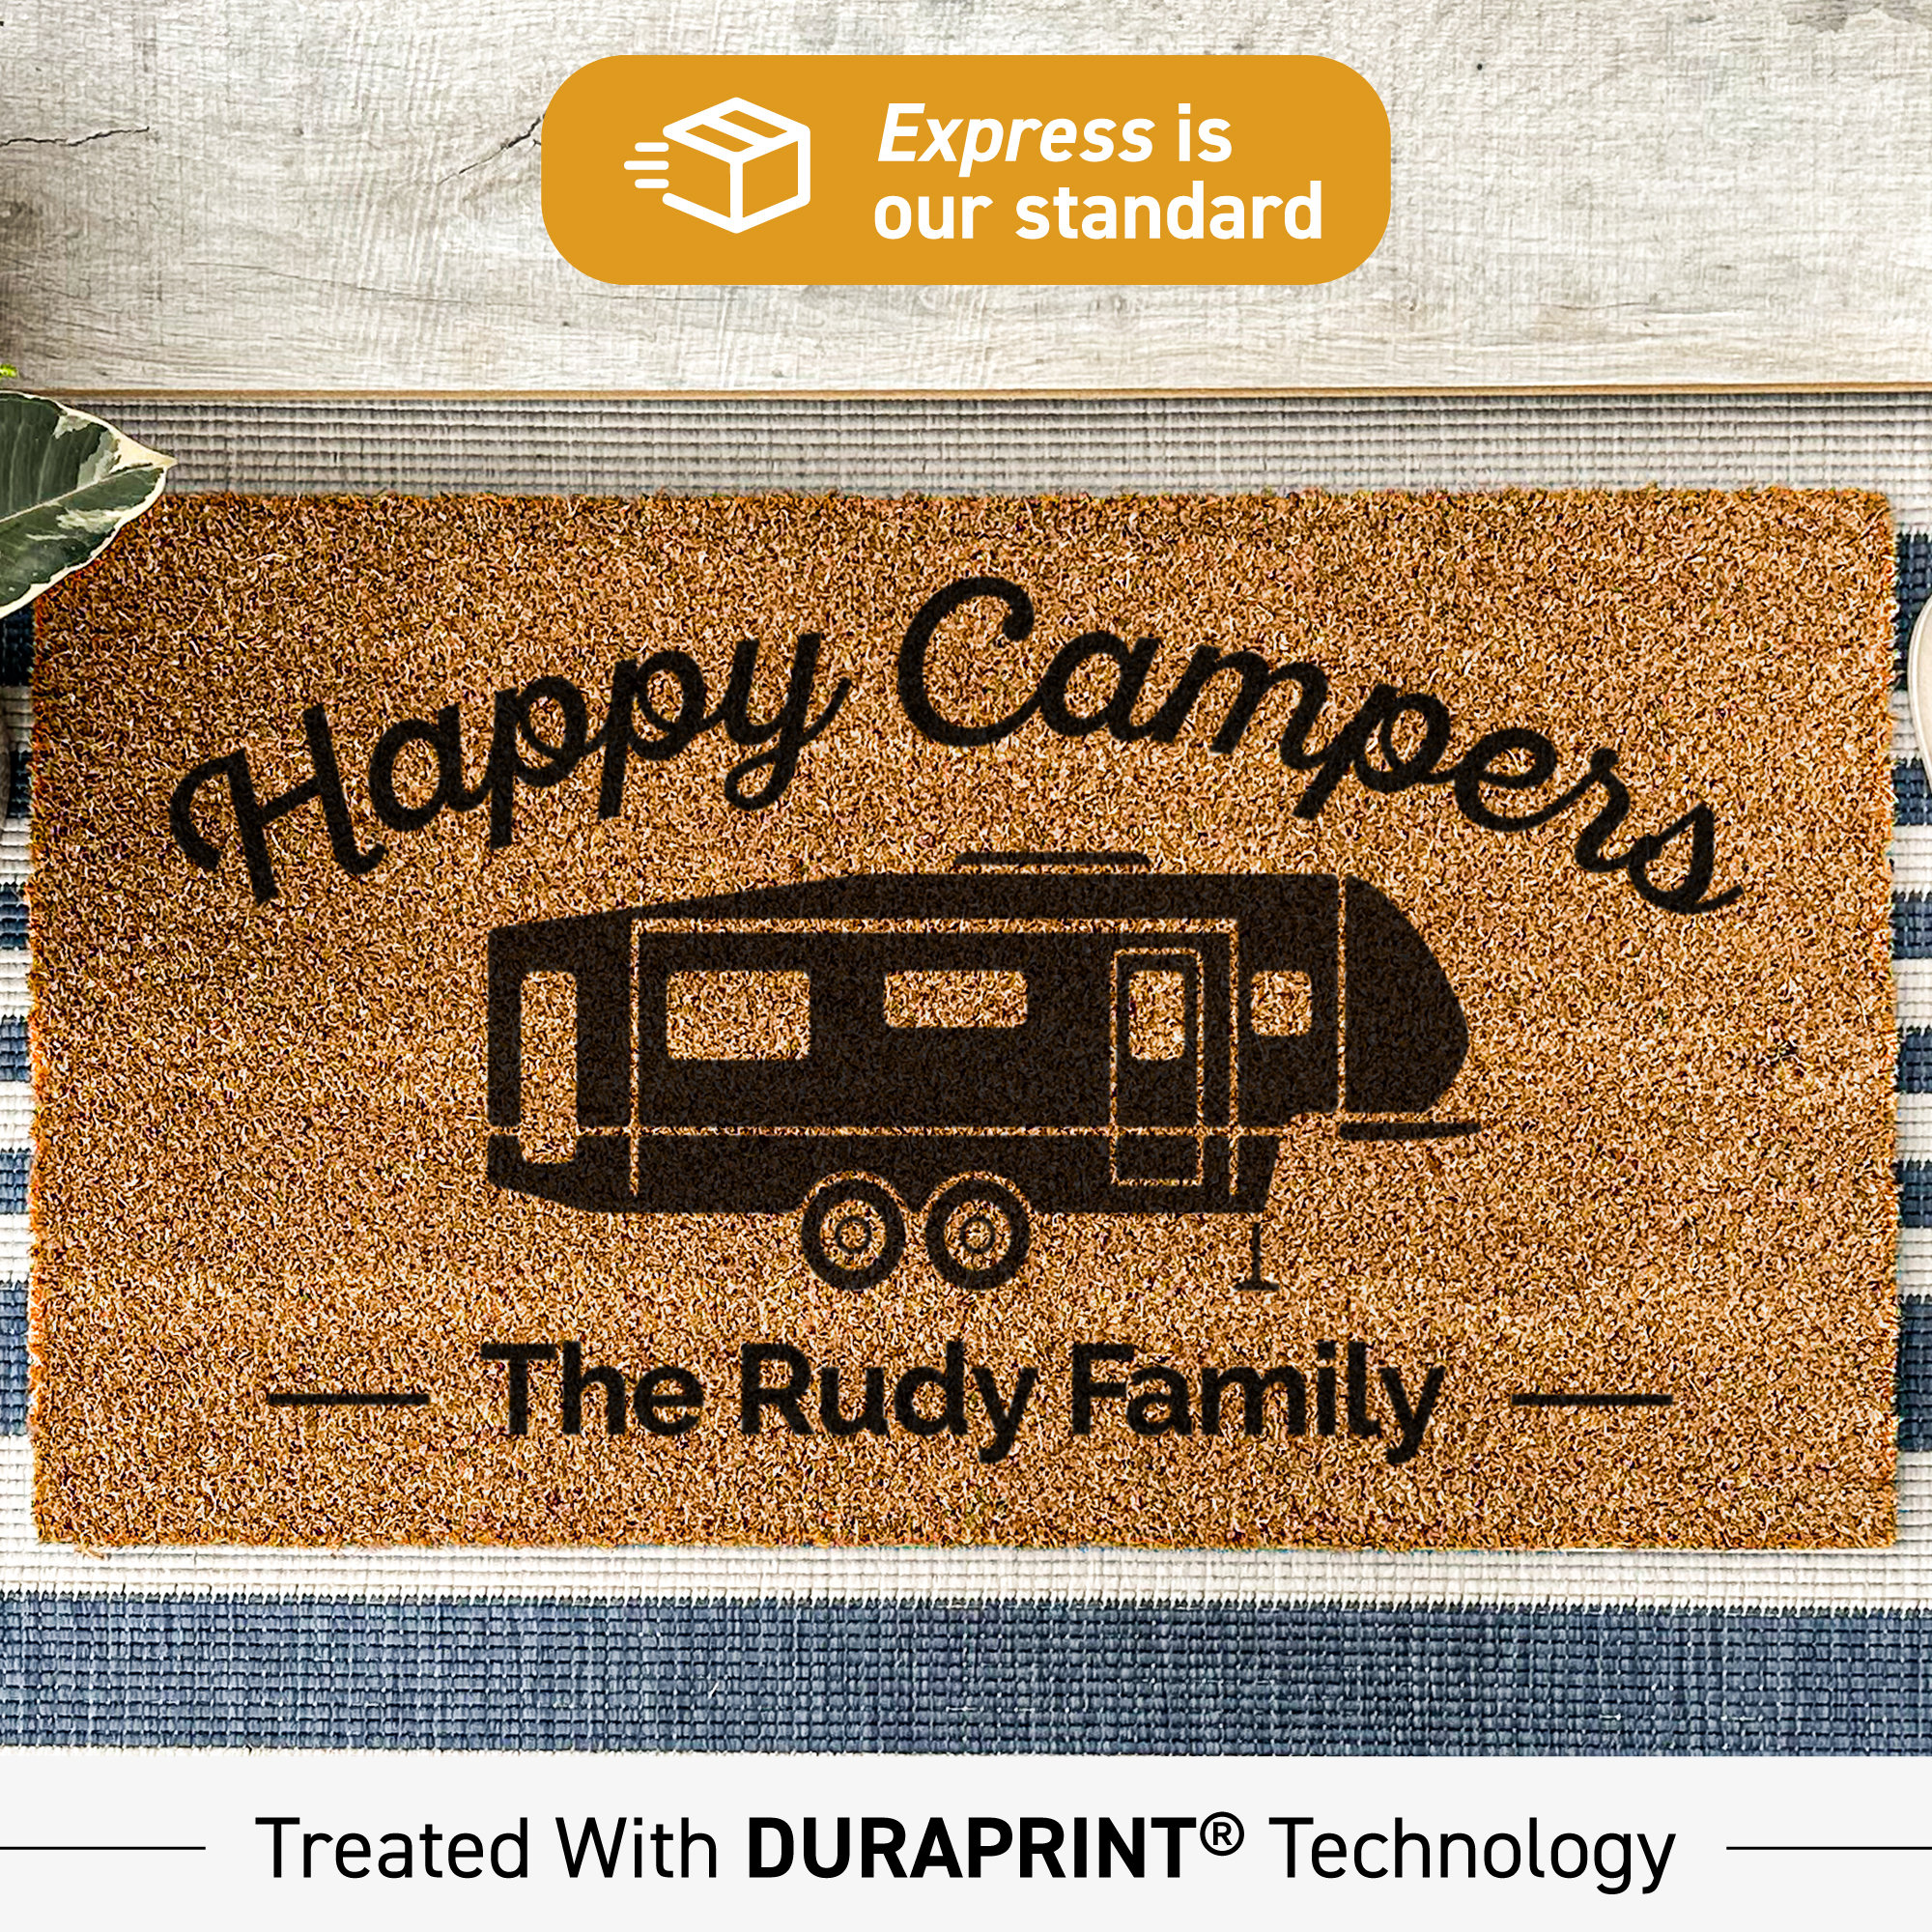 Daylor Coir Door Mat Entry Doormat Happy Camper RV Camping